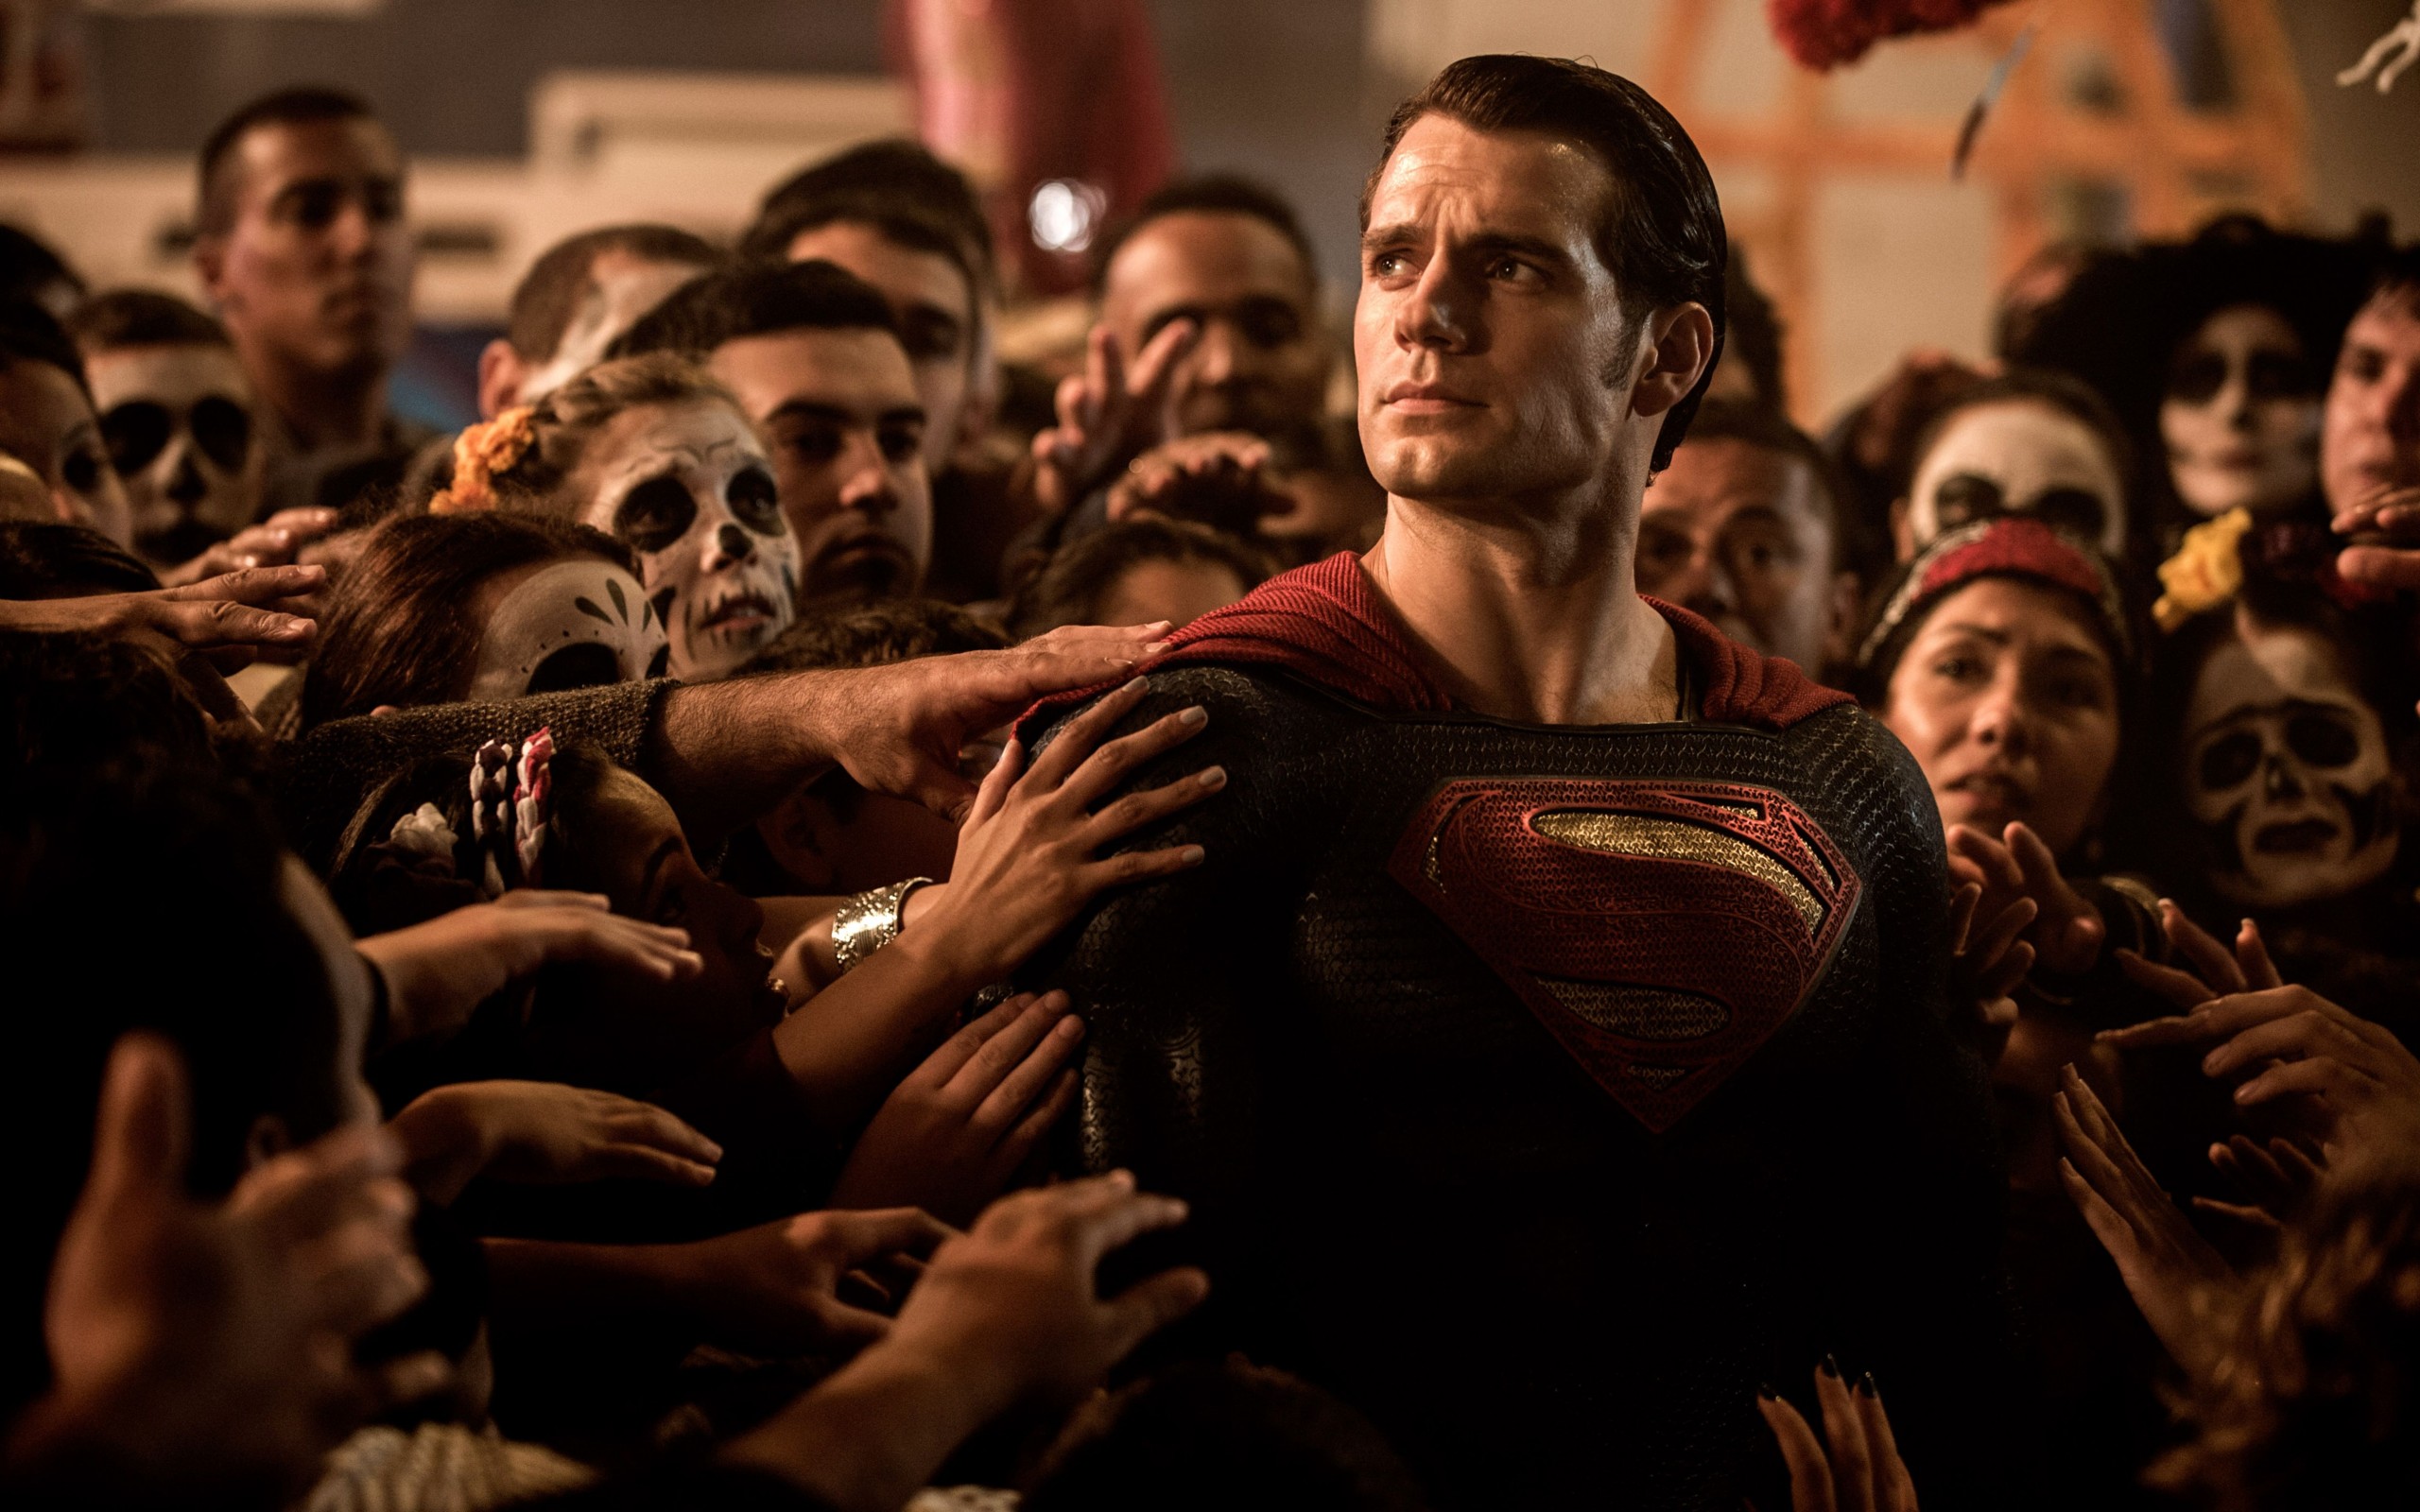 superman hd wallpaper,people,crowd,audience,event,flesh